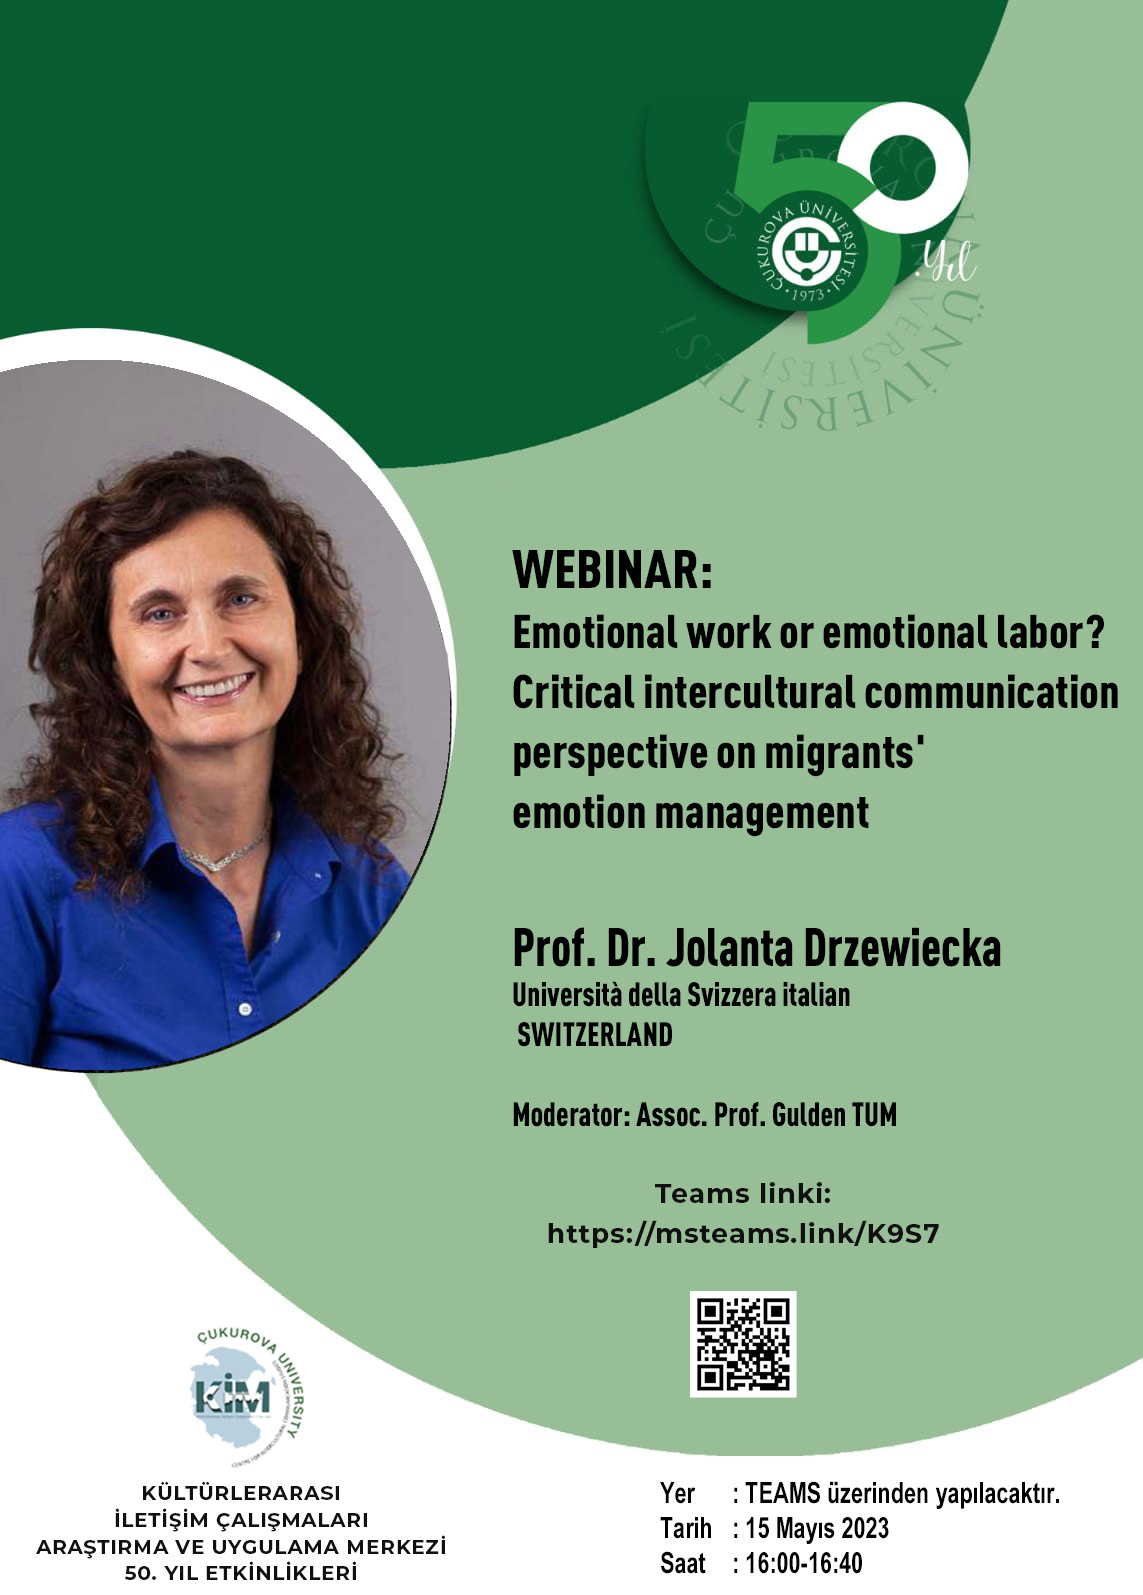 KİM Webinar: Prof. Dr. Jolanta Drzewiecka - "Emotional work or emotional labor? Critical intercultural communication perspective on migrants' emotion management"